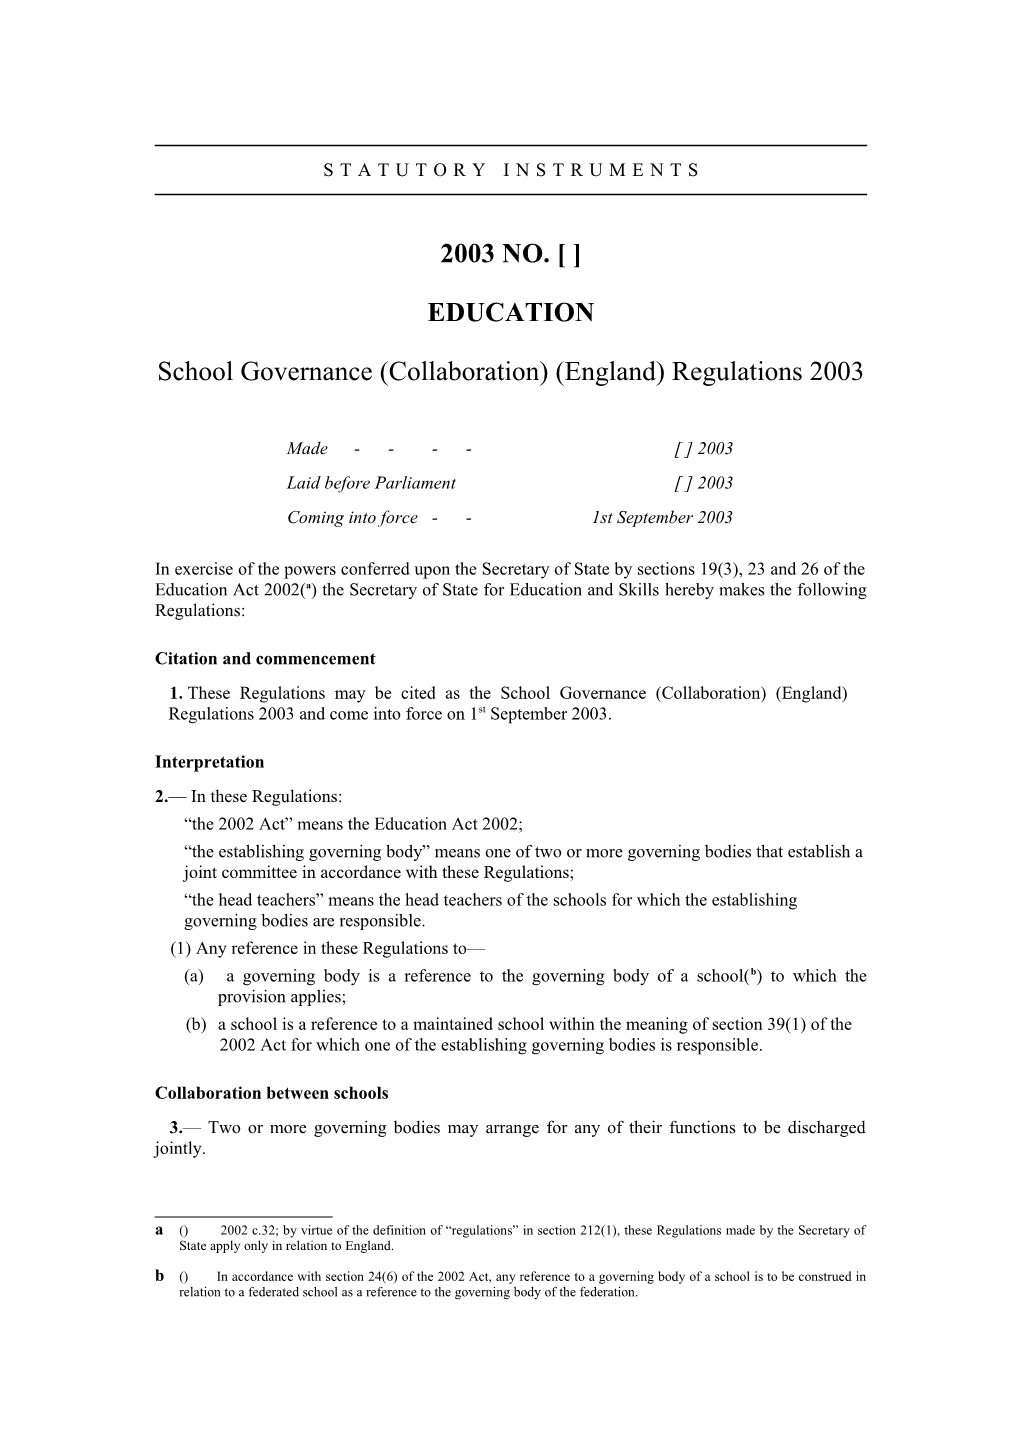 School Governance (Collaboration) (England) Regulations 2003